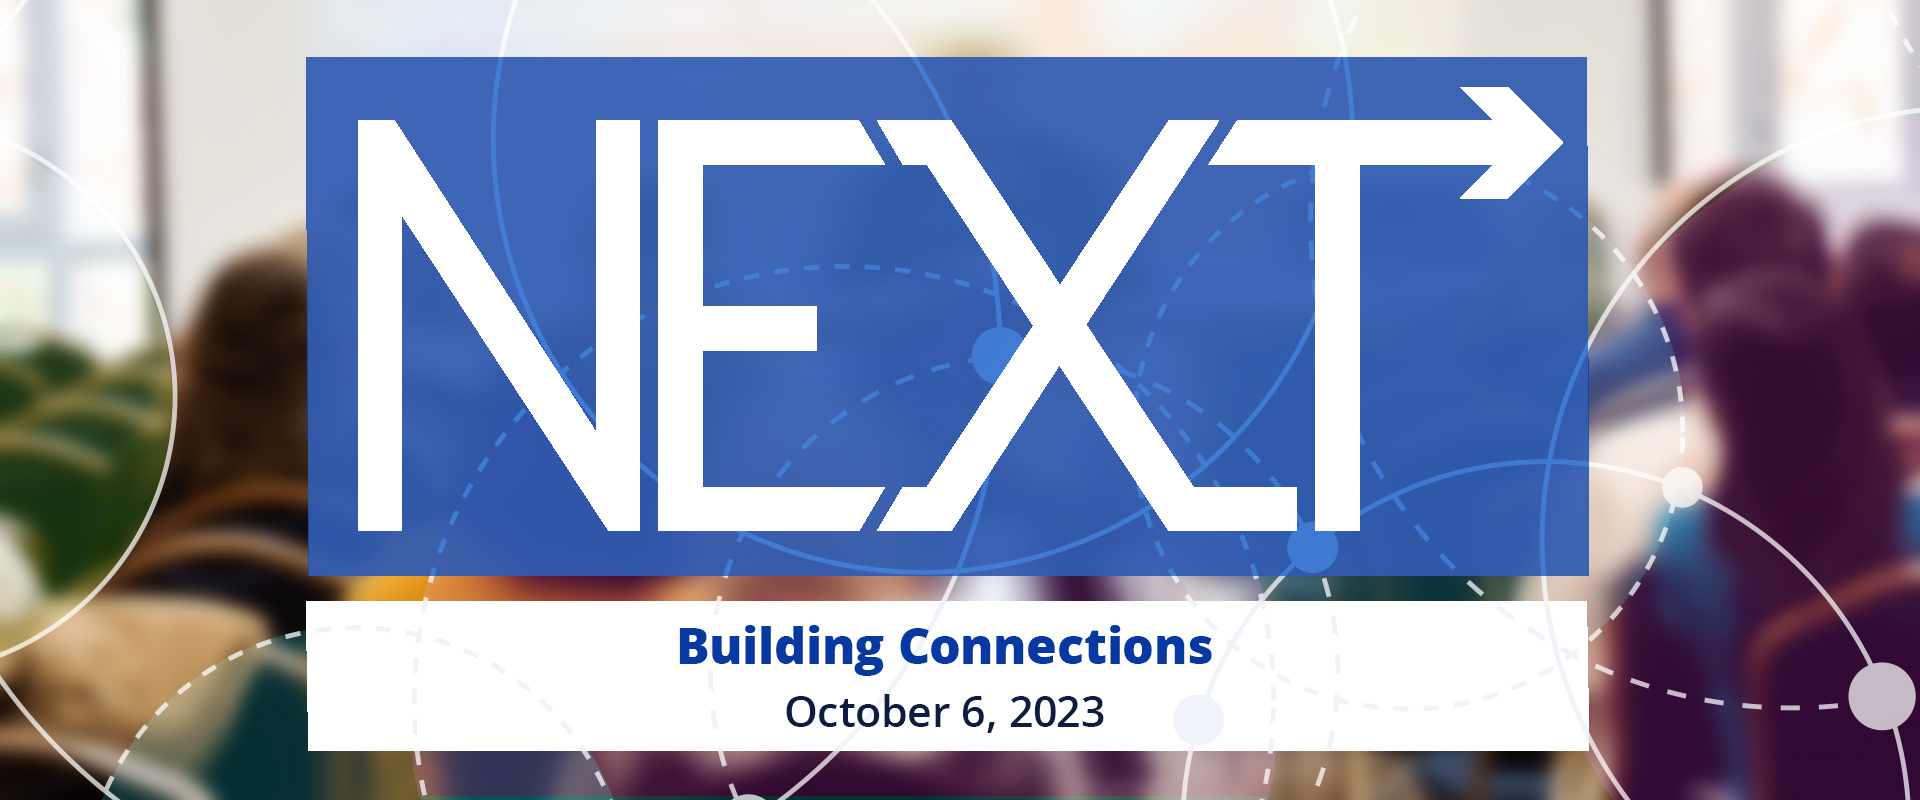 Next2023-建连接-10月6日2023